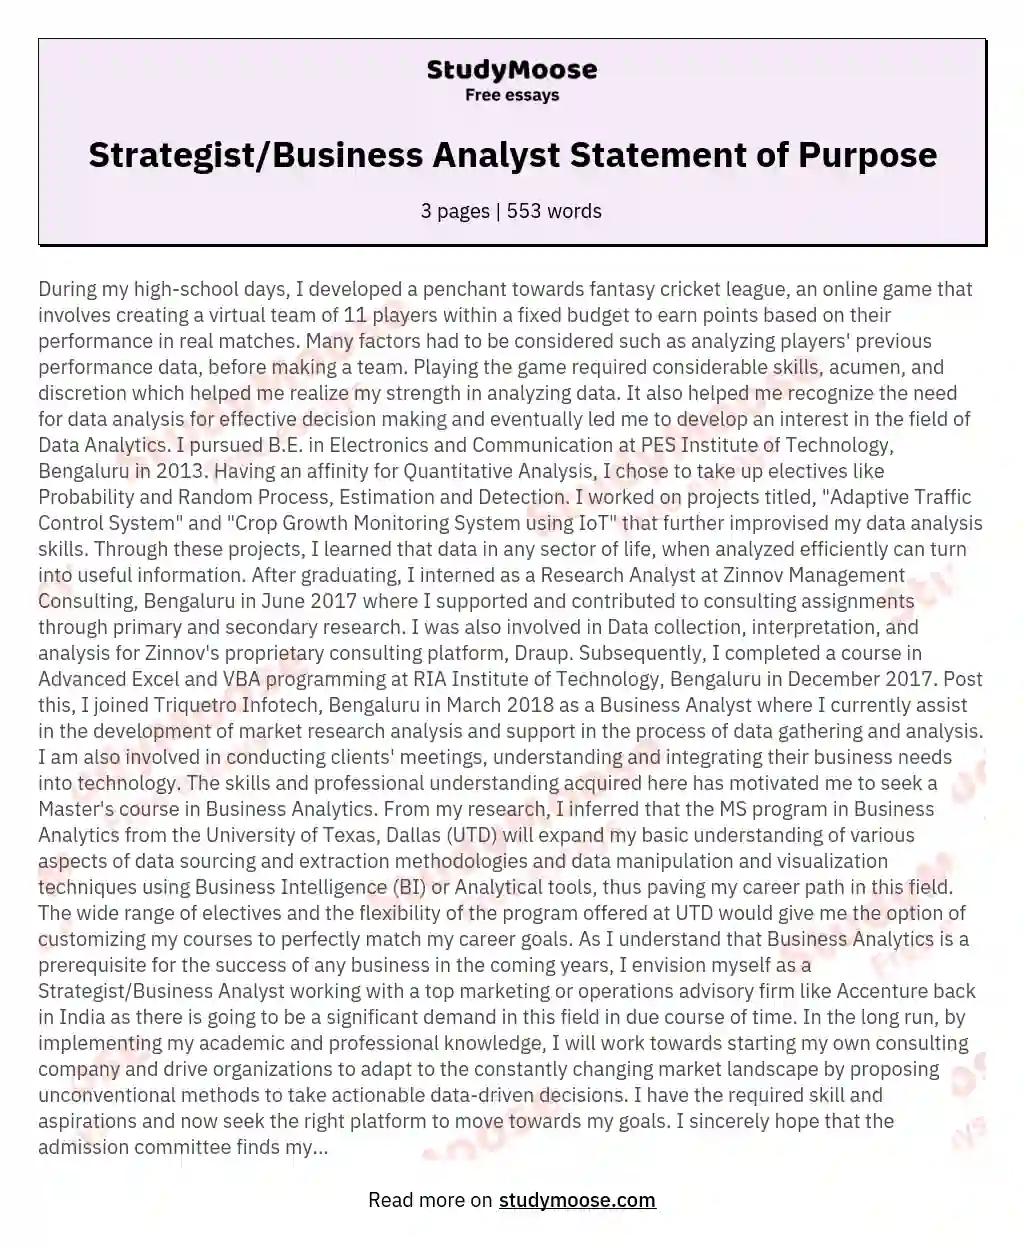 Strategist/Business Analyst Statement of Purpose